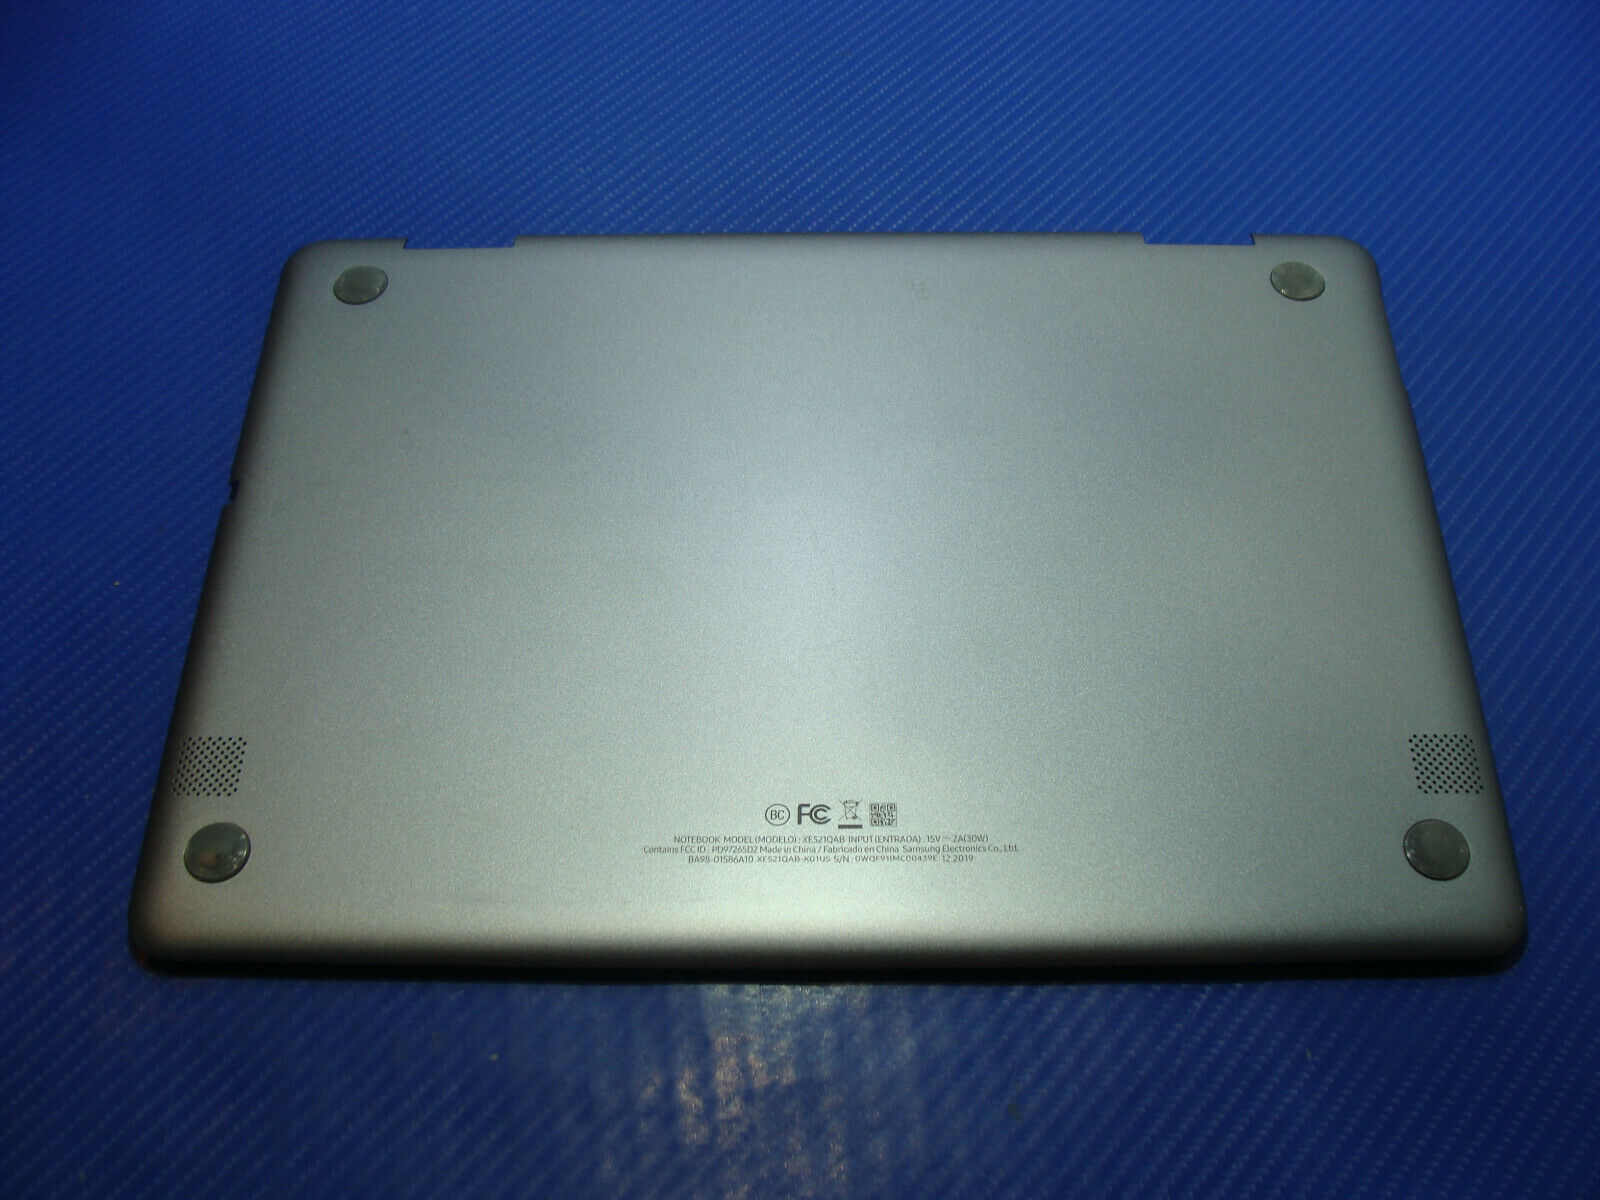 Samsung Chromebook Plus XE521QAB-K01US 12.2